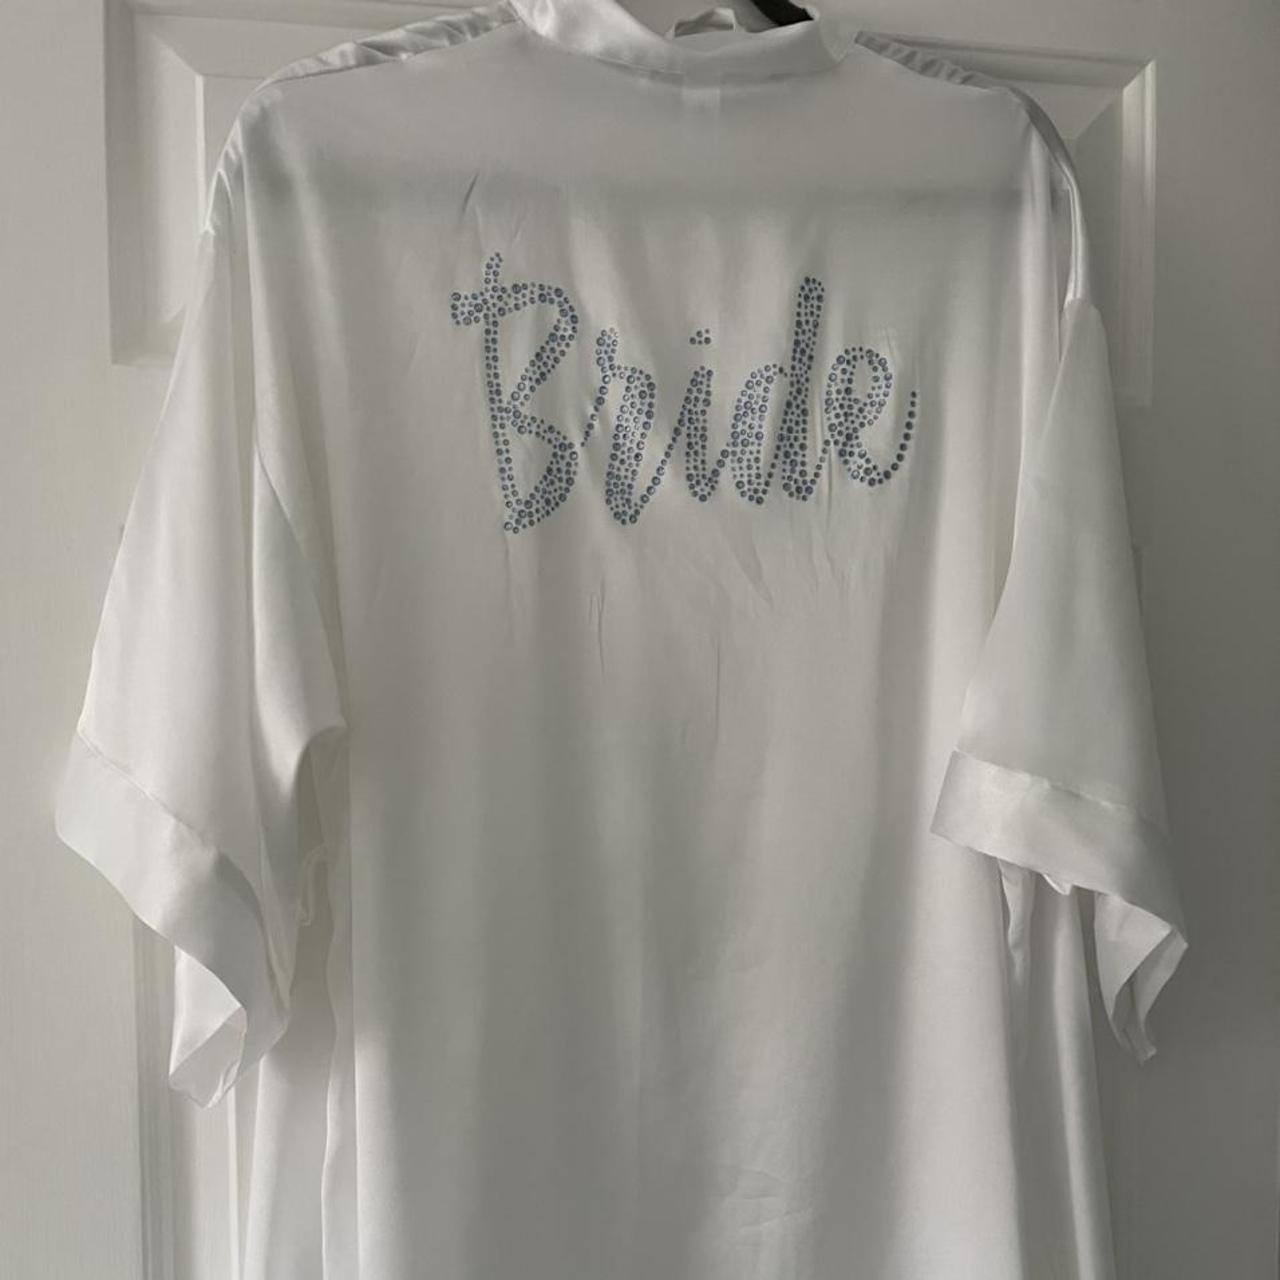 Product Image 1 - Victoria Secret bridal robe -